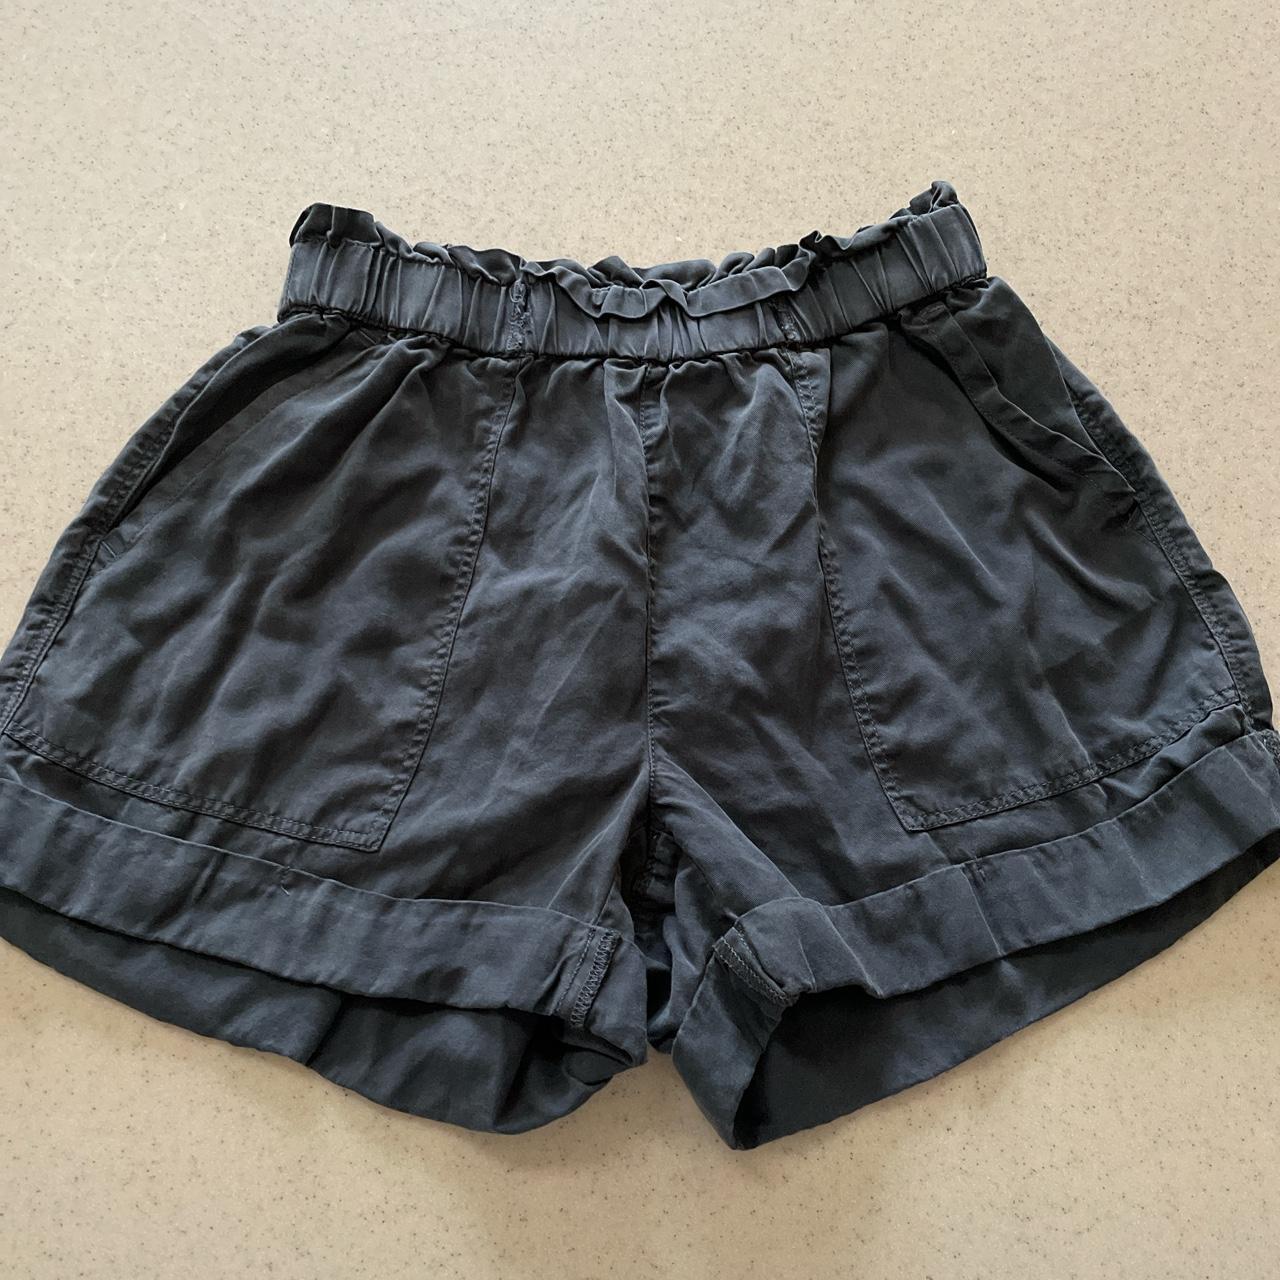 Aerie Women's Black Shorts | Depop